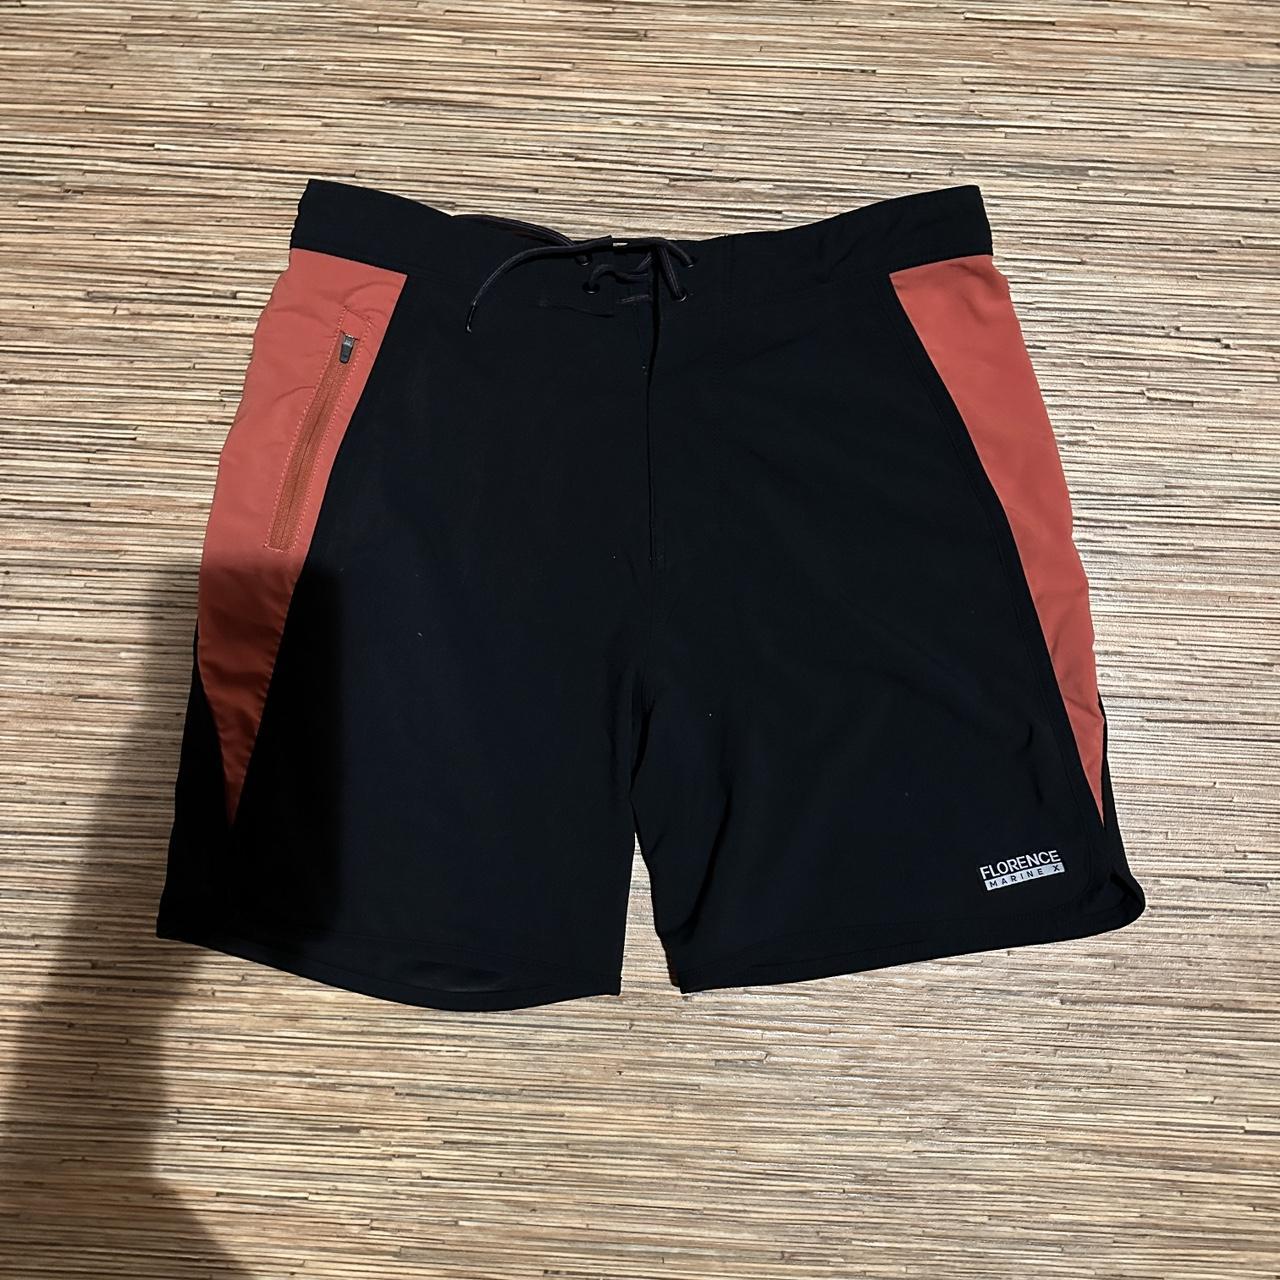 Florence Marine X Board Shorts